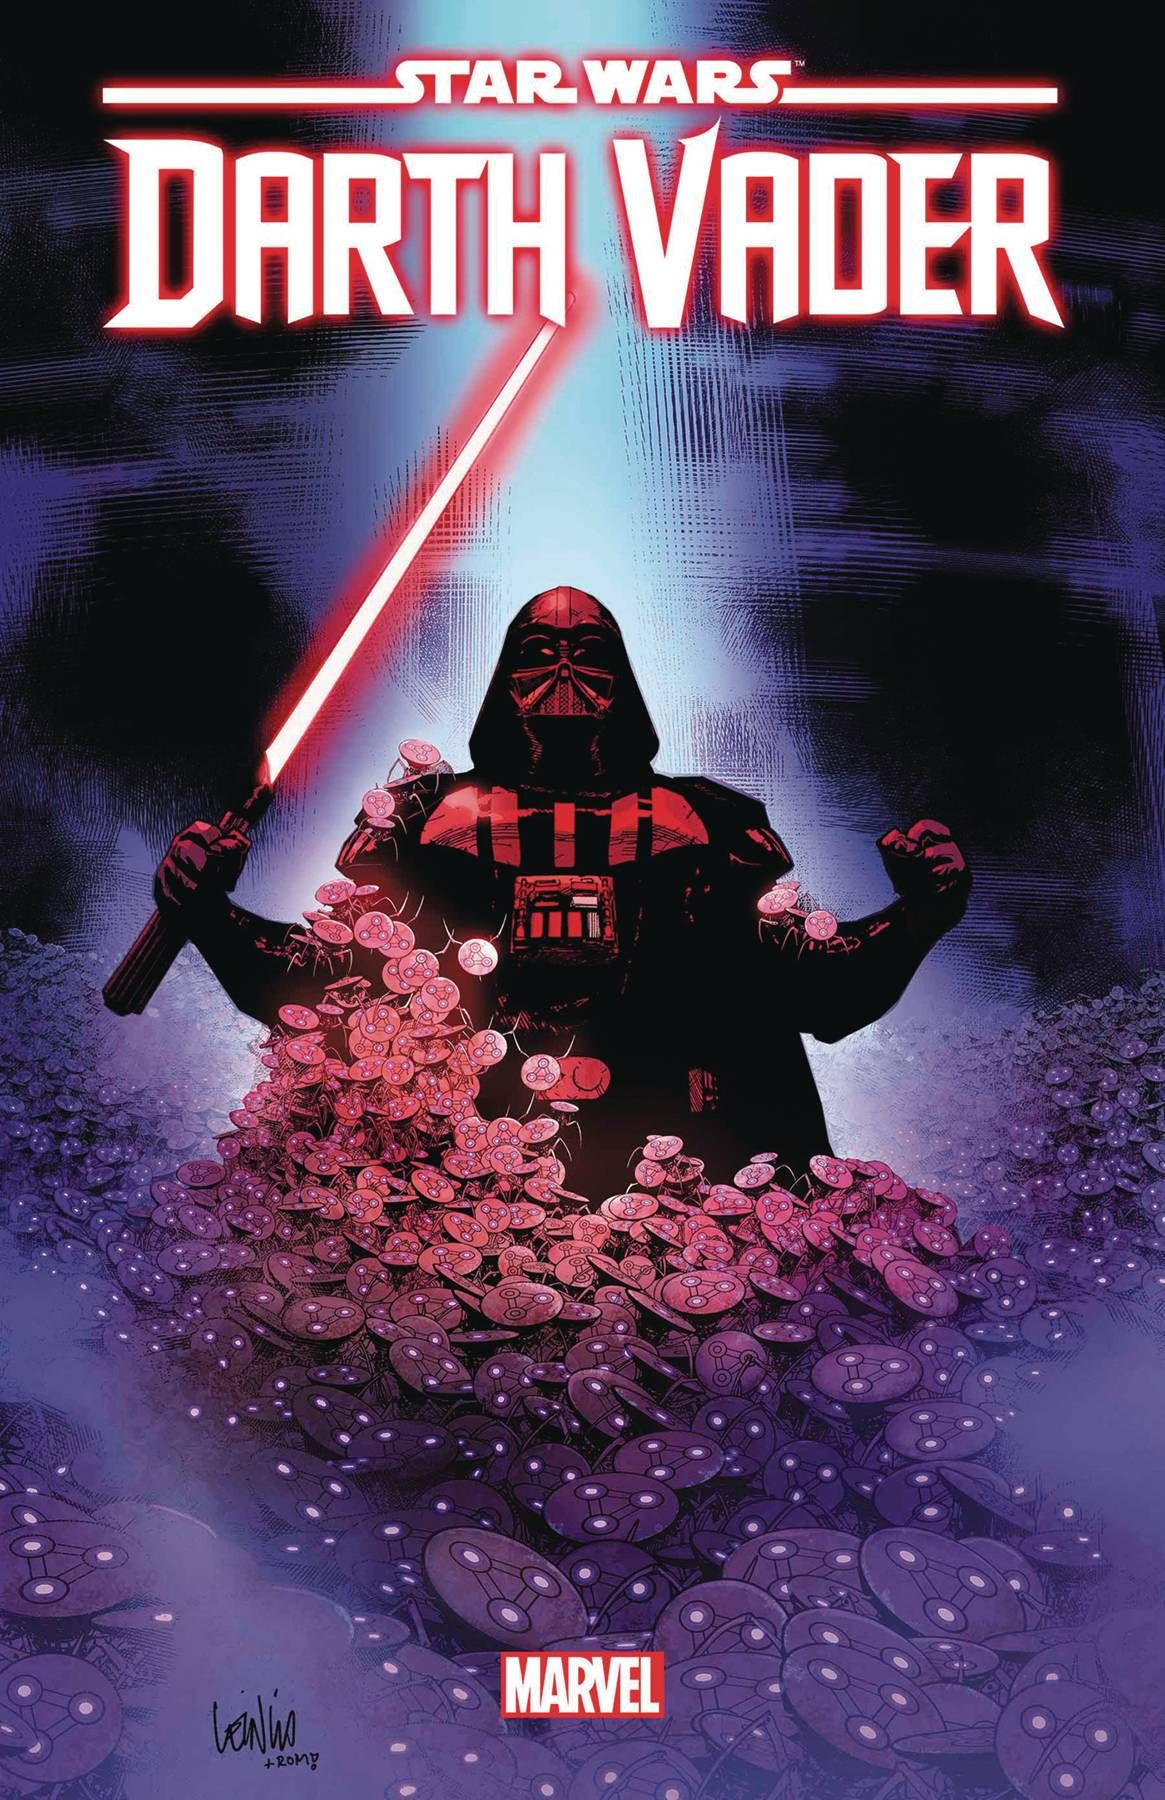 Darth Vader #41 Cover Art